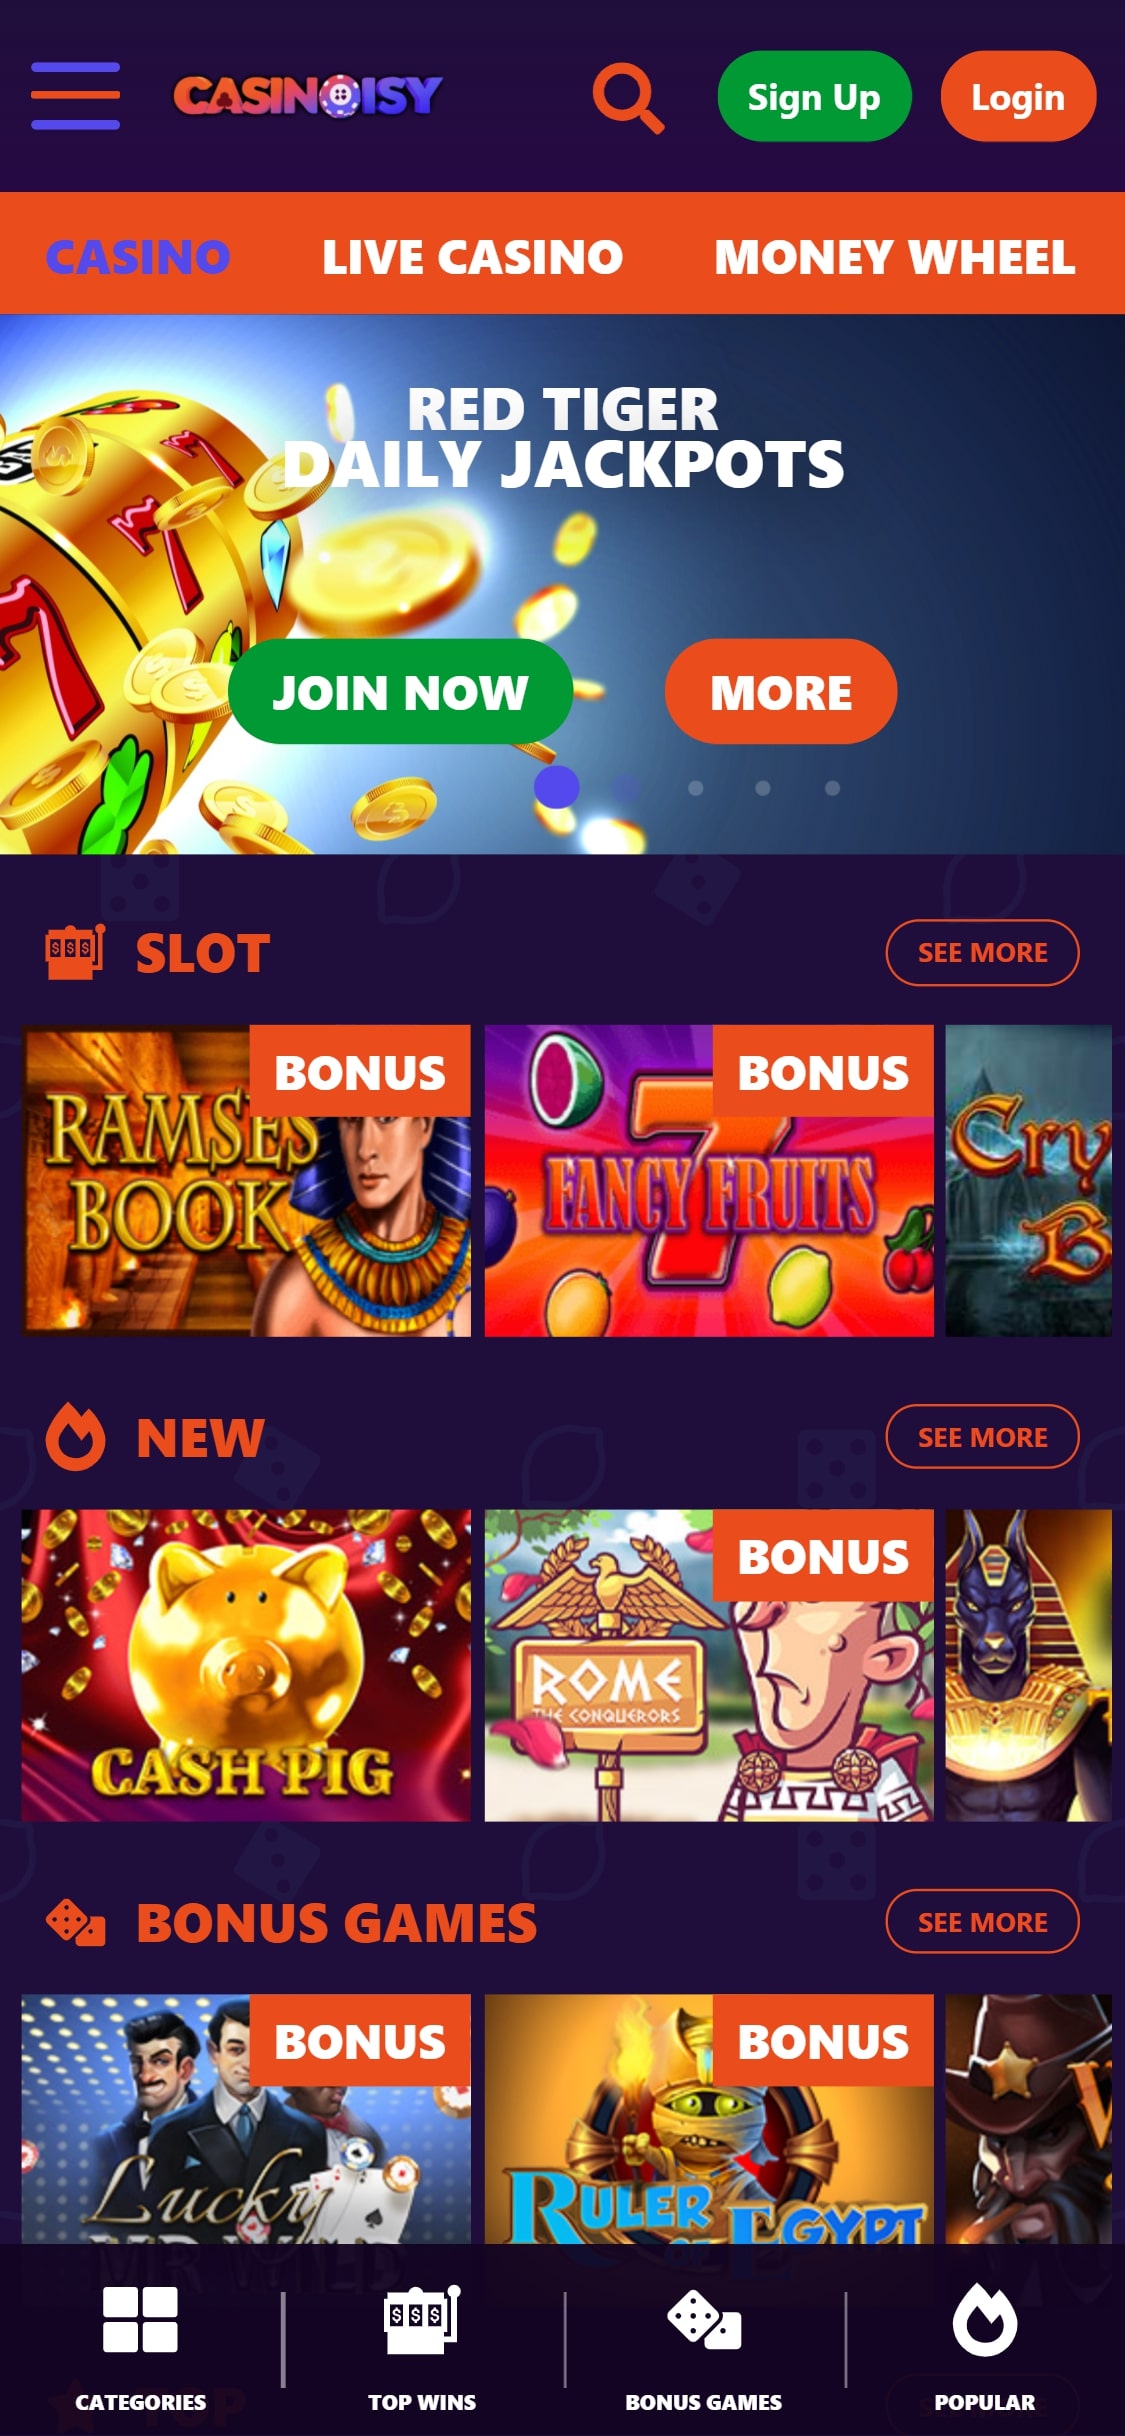 Casinoisy casino Mobile Review